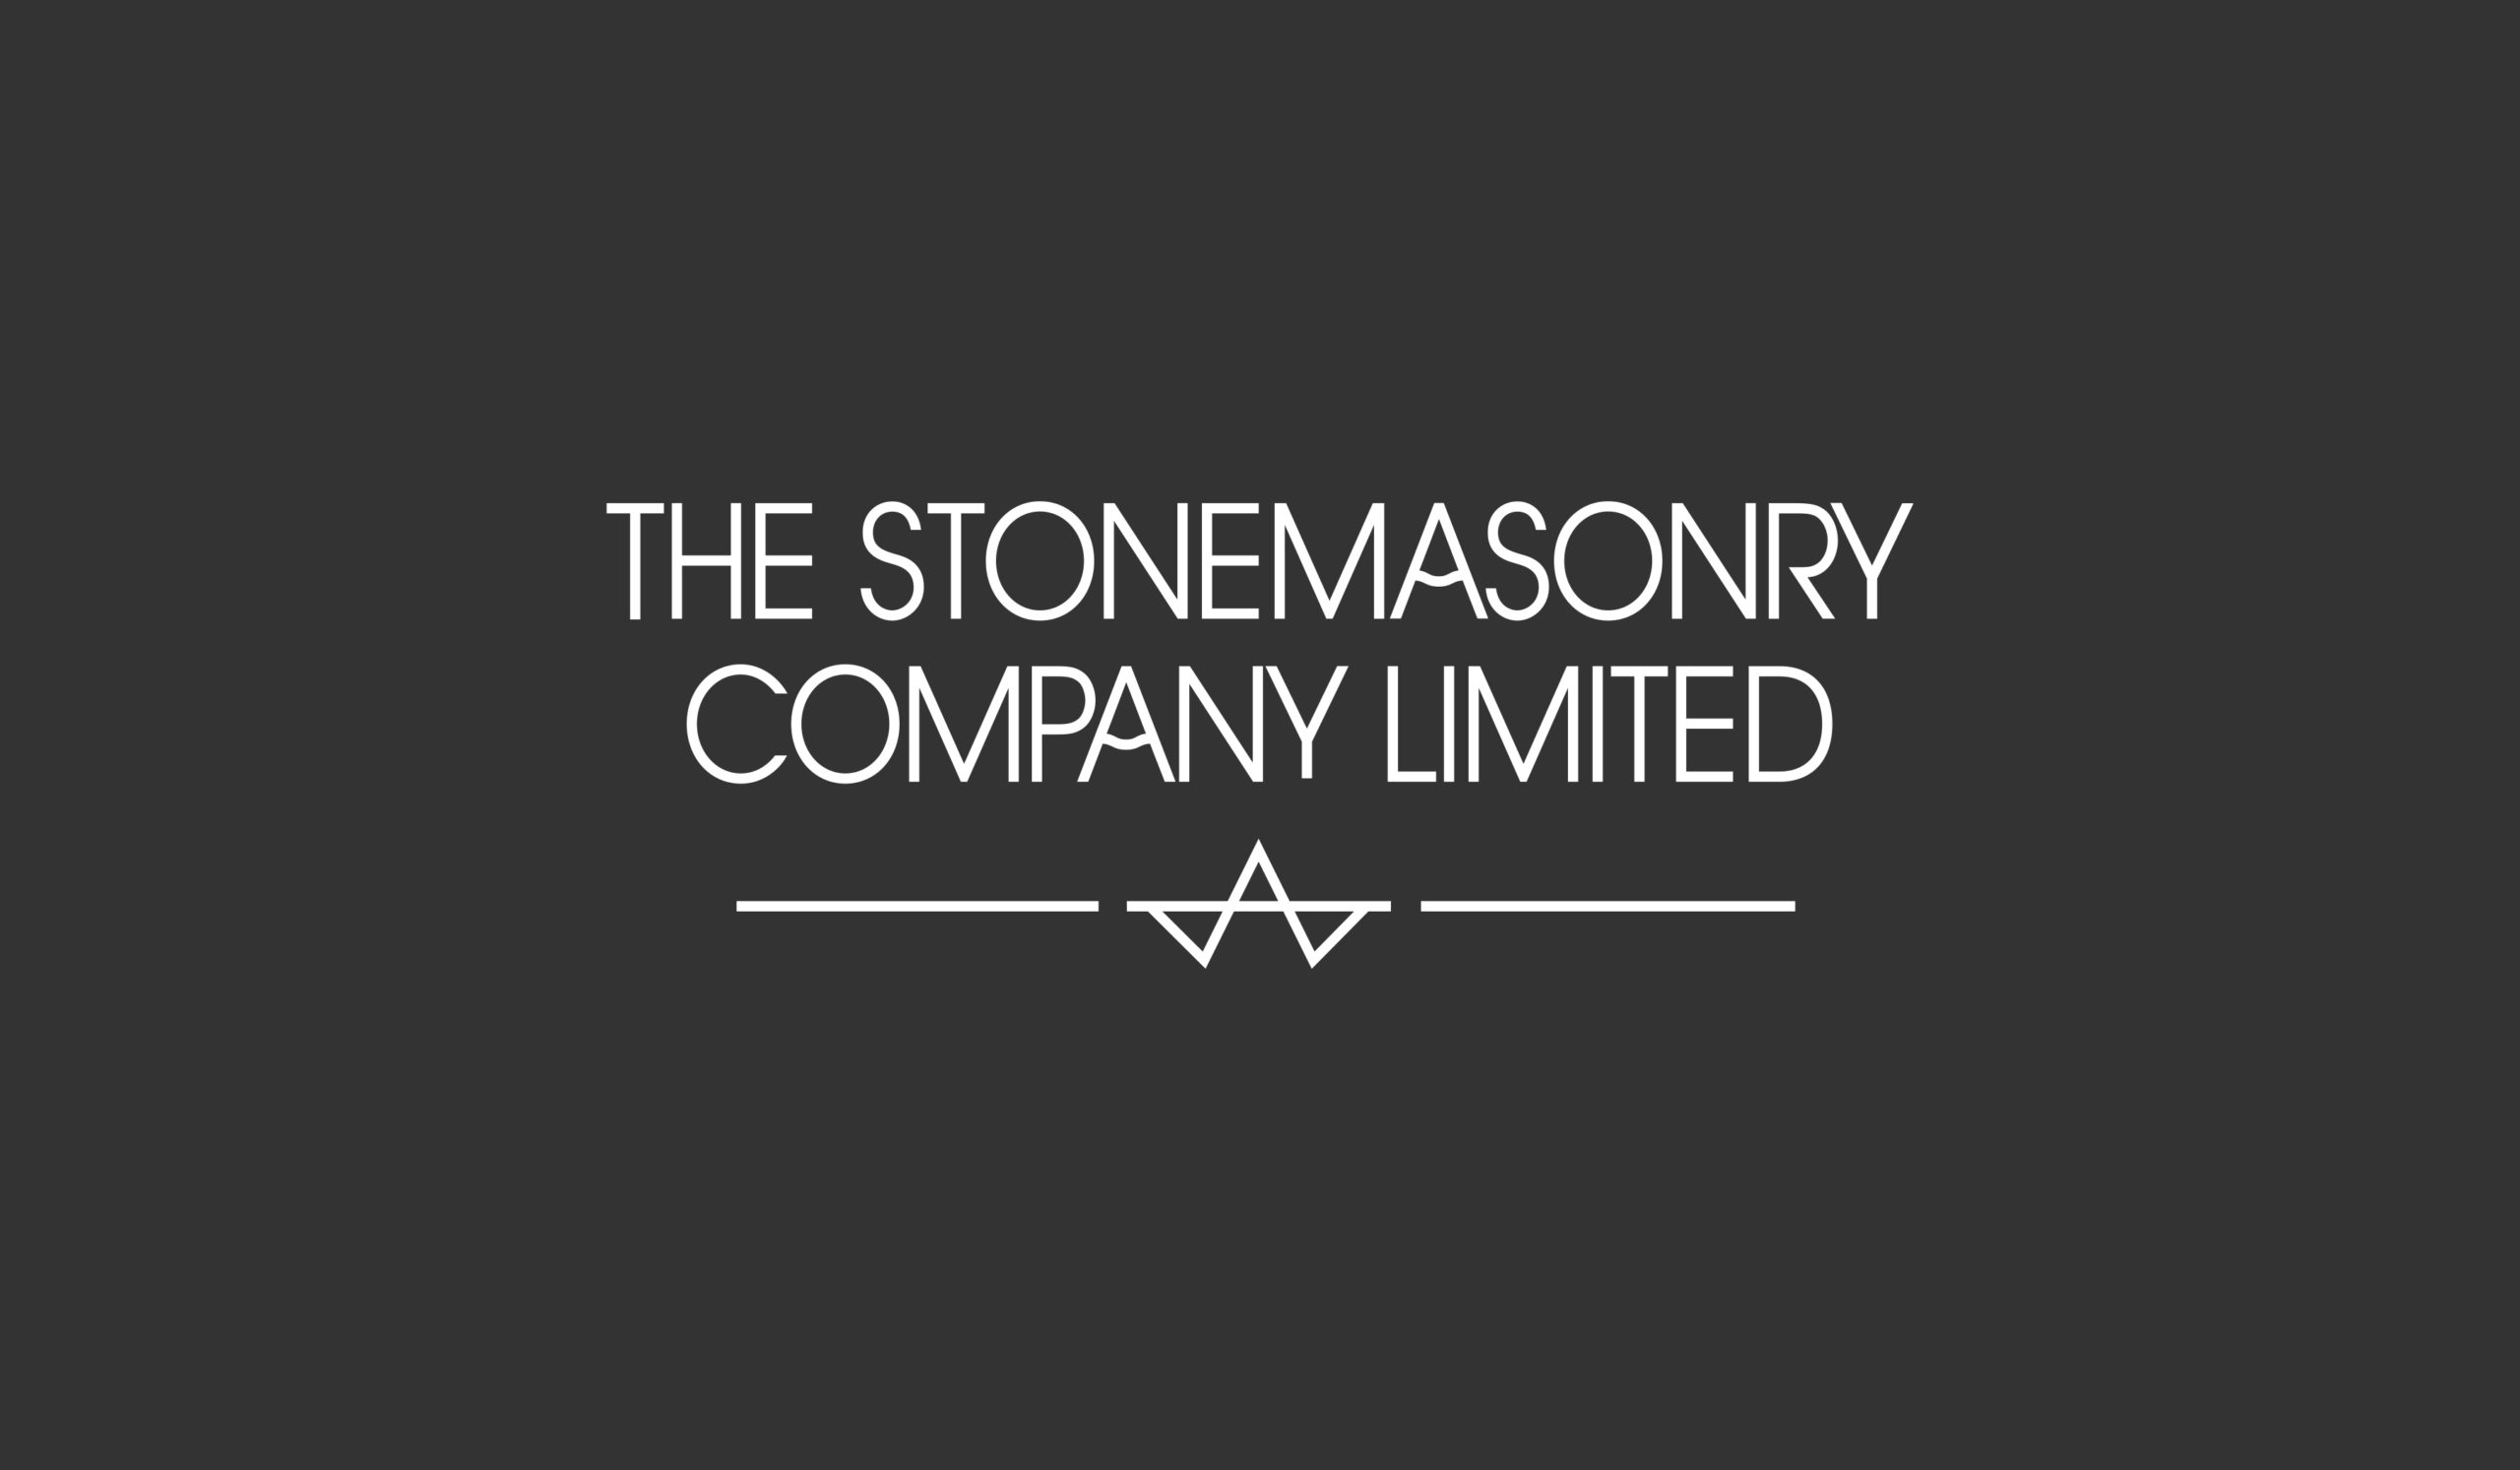 Primary logo design for The Stonemasonry Company Limited